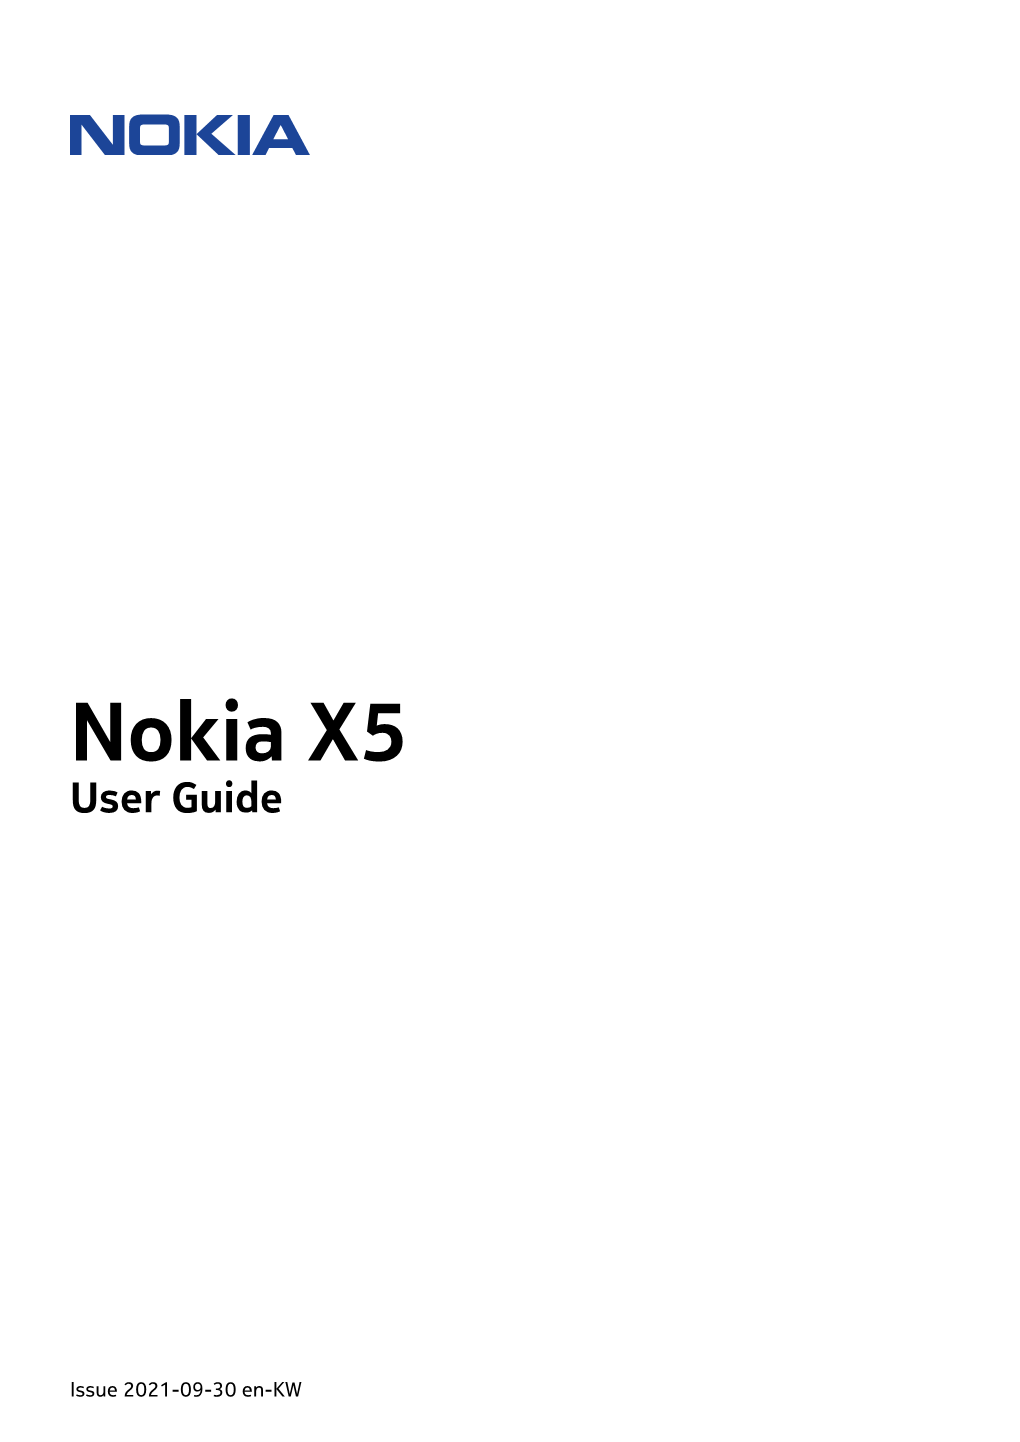 Nokia X5 User Guide